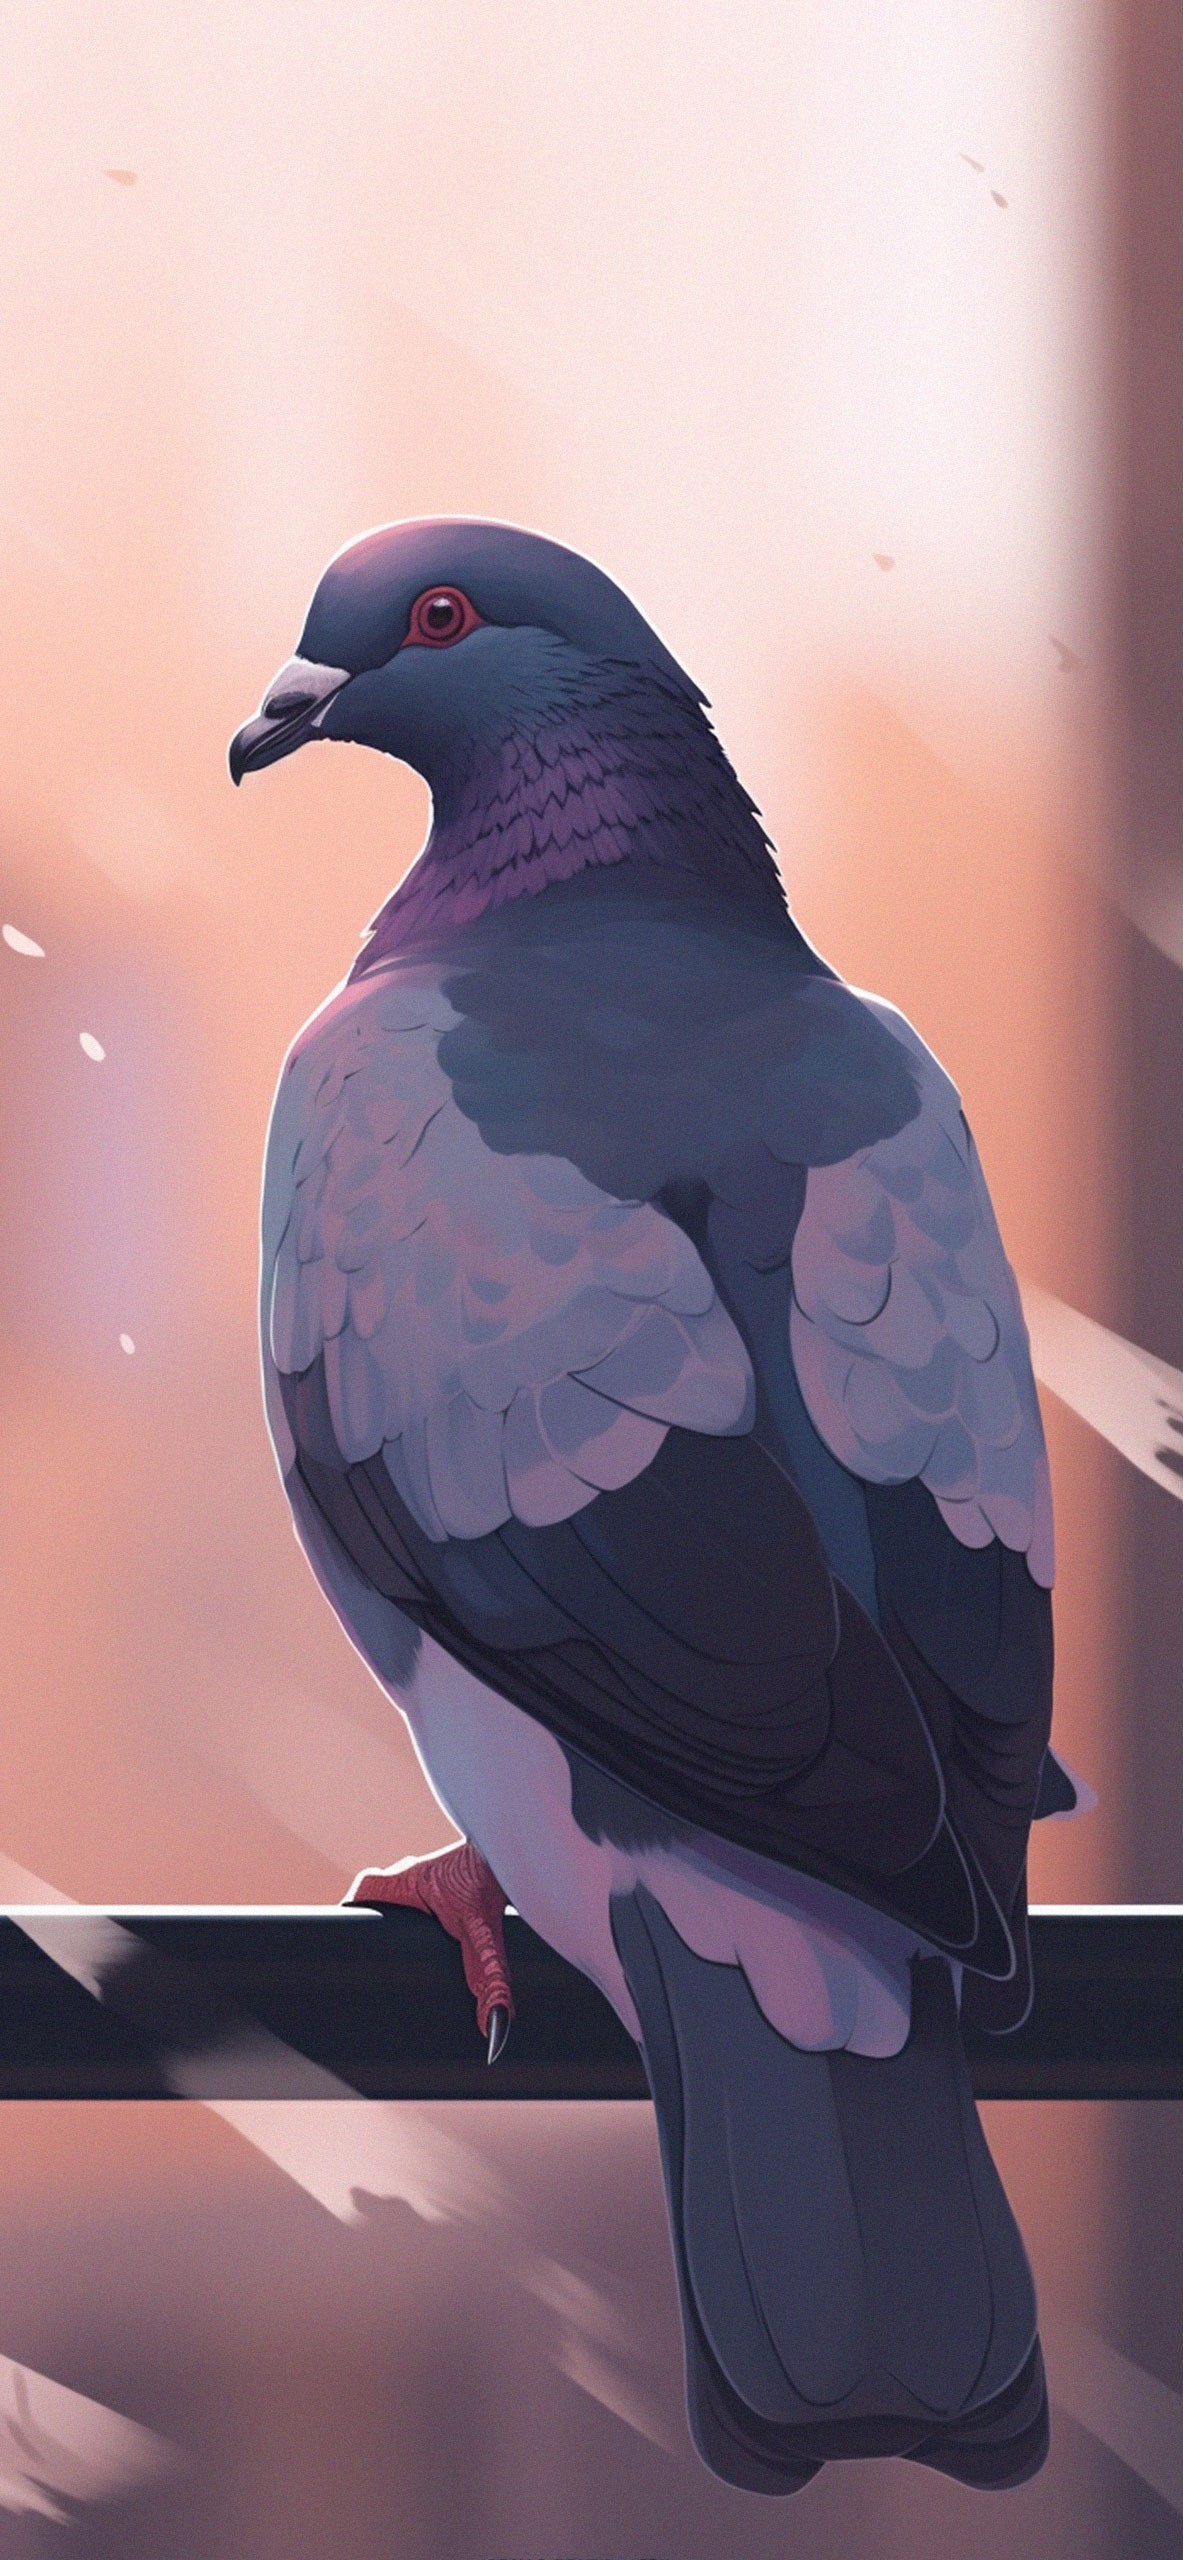 Aesthetic Pigeon Wallpaper Pigeon Wallpaper for iPhone